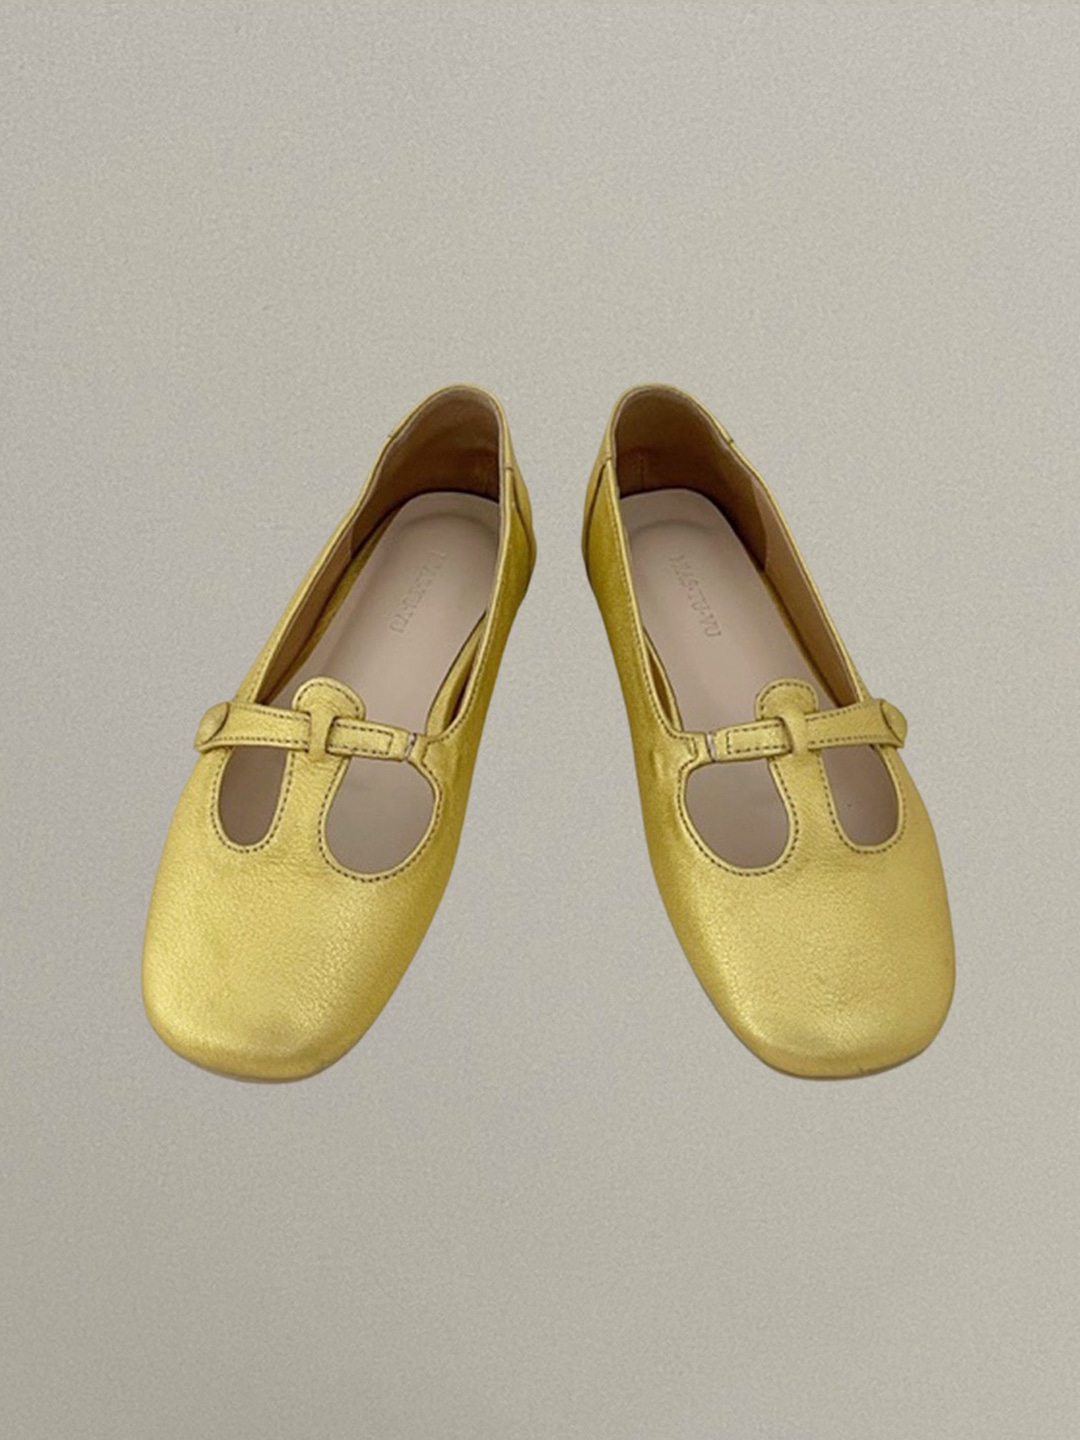 Maé Flat shoes - Kids Gold(lamb)(4월15일발송 )